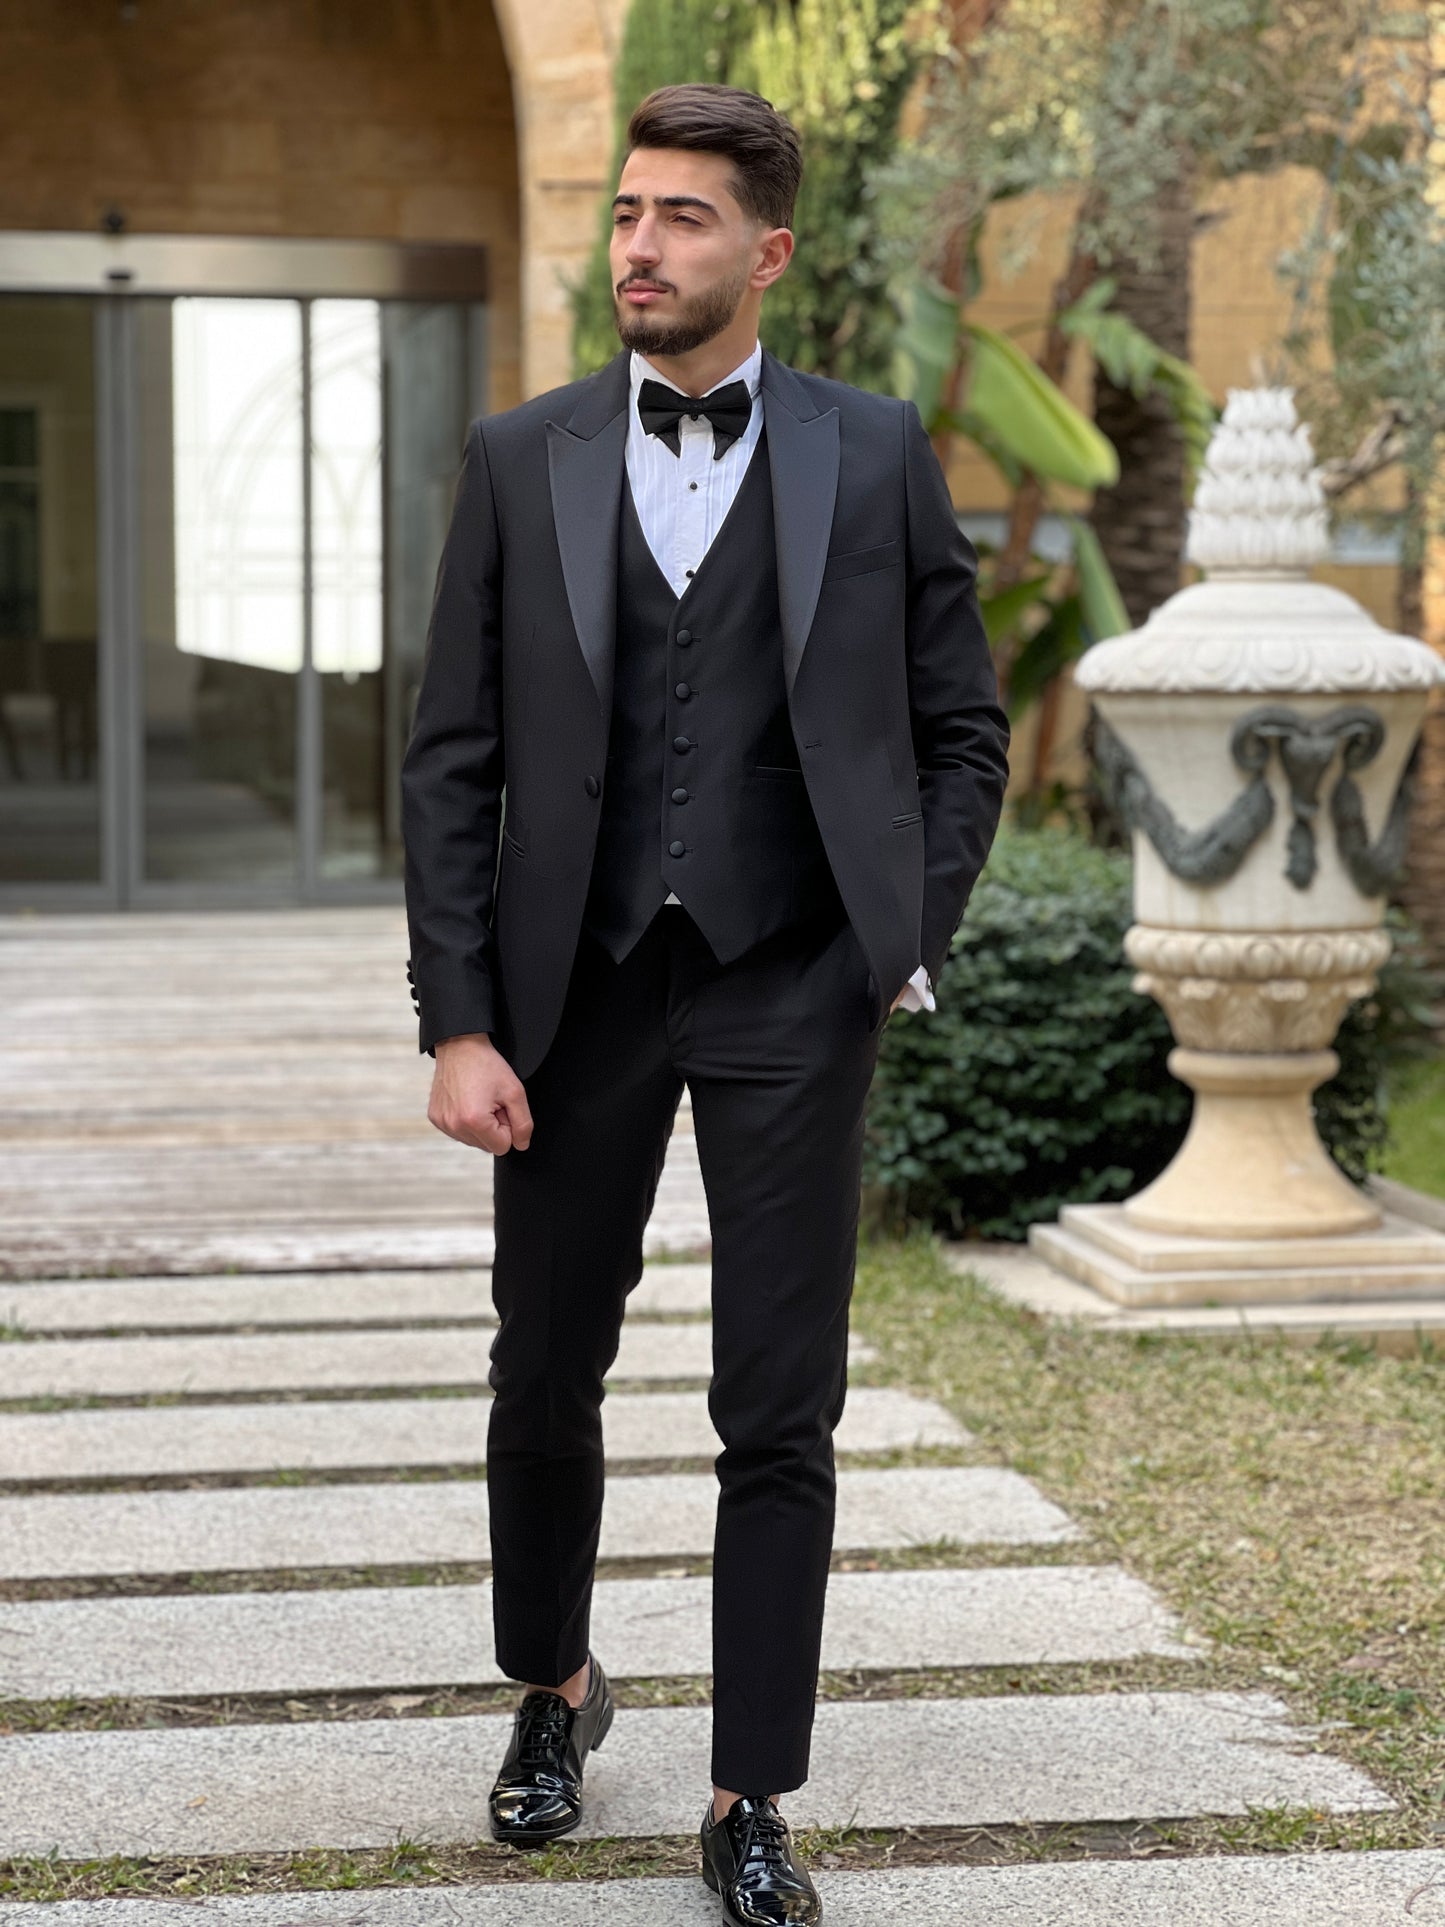 2H black Peaked Lapel Wedding Suit